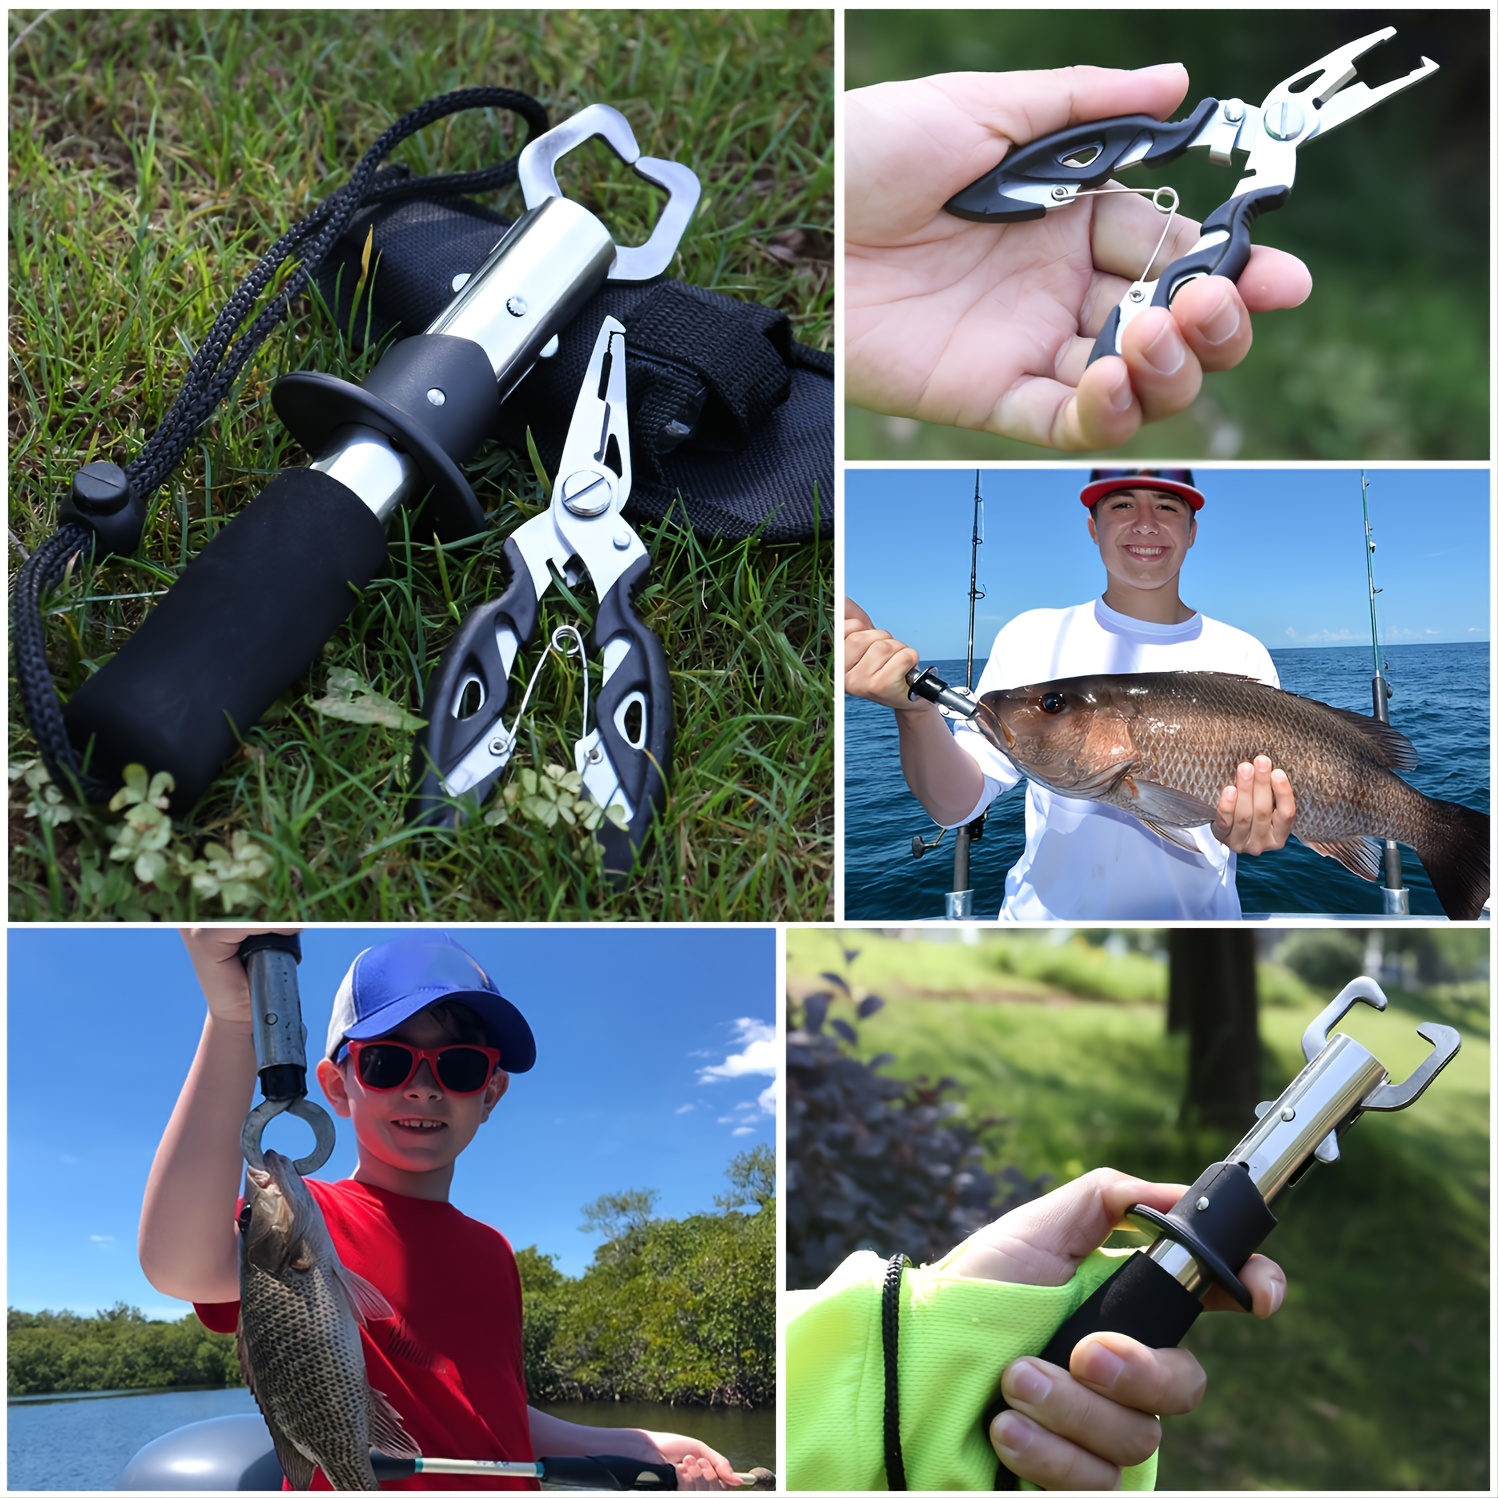 7 in 1 Fishing Tools Set Fishing Pliers Fish Lip Gripper Fishing